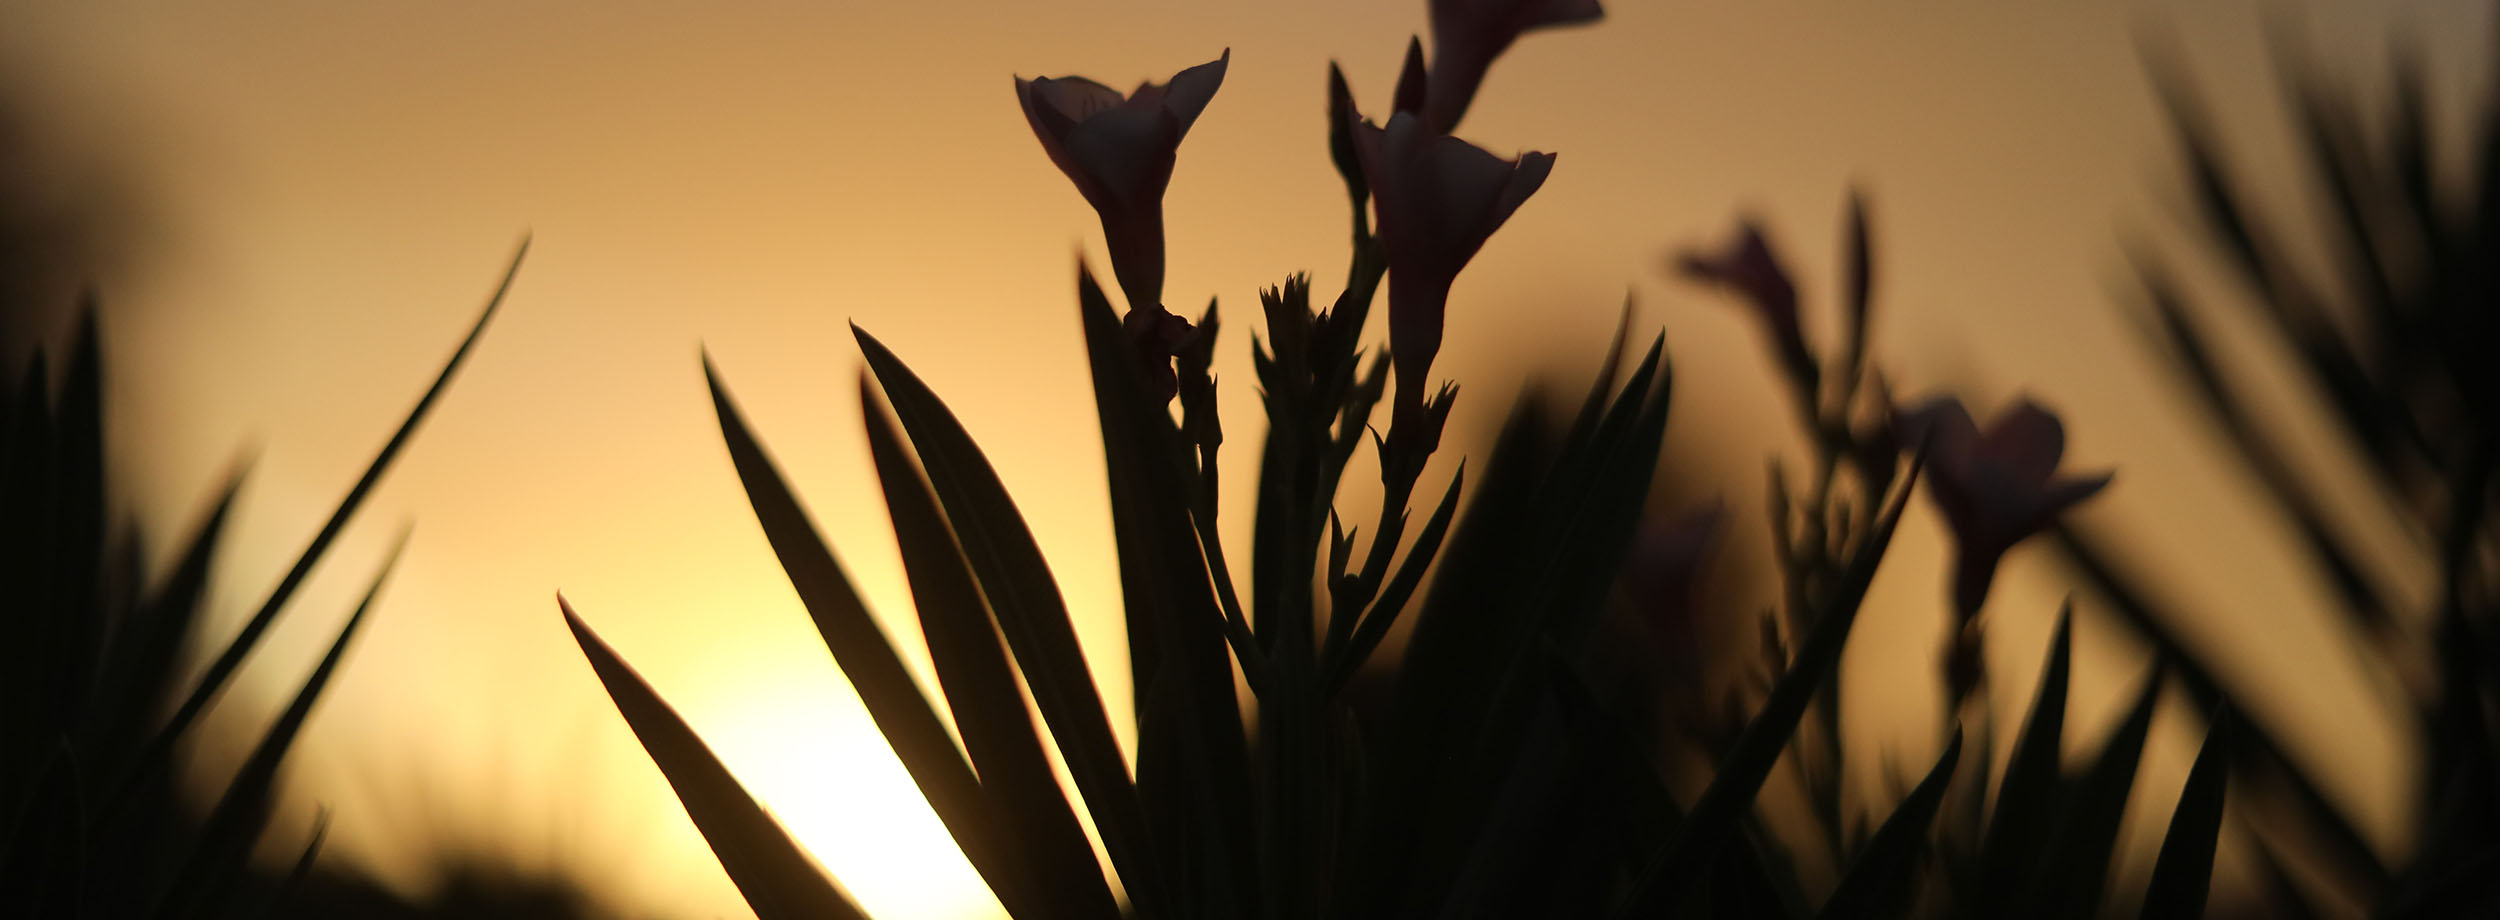 Flowers against a sunset sky